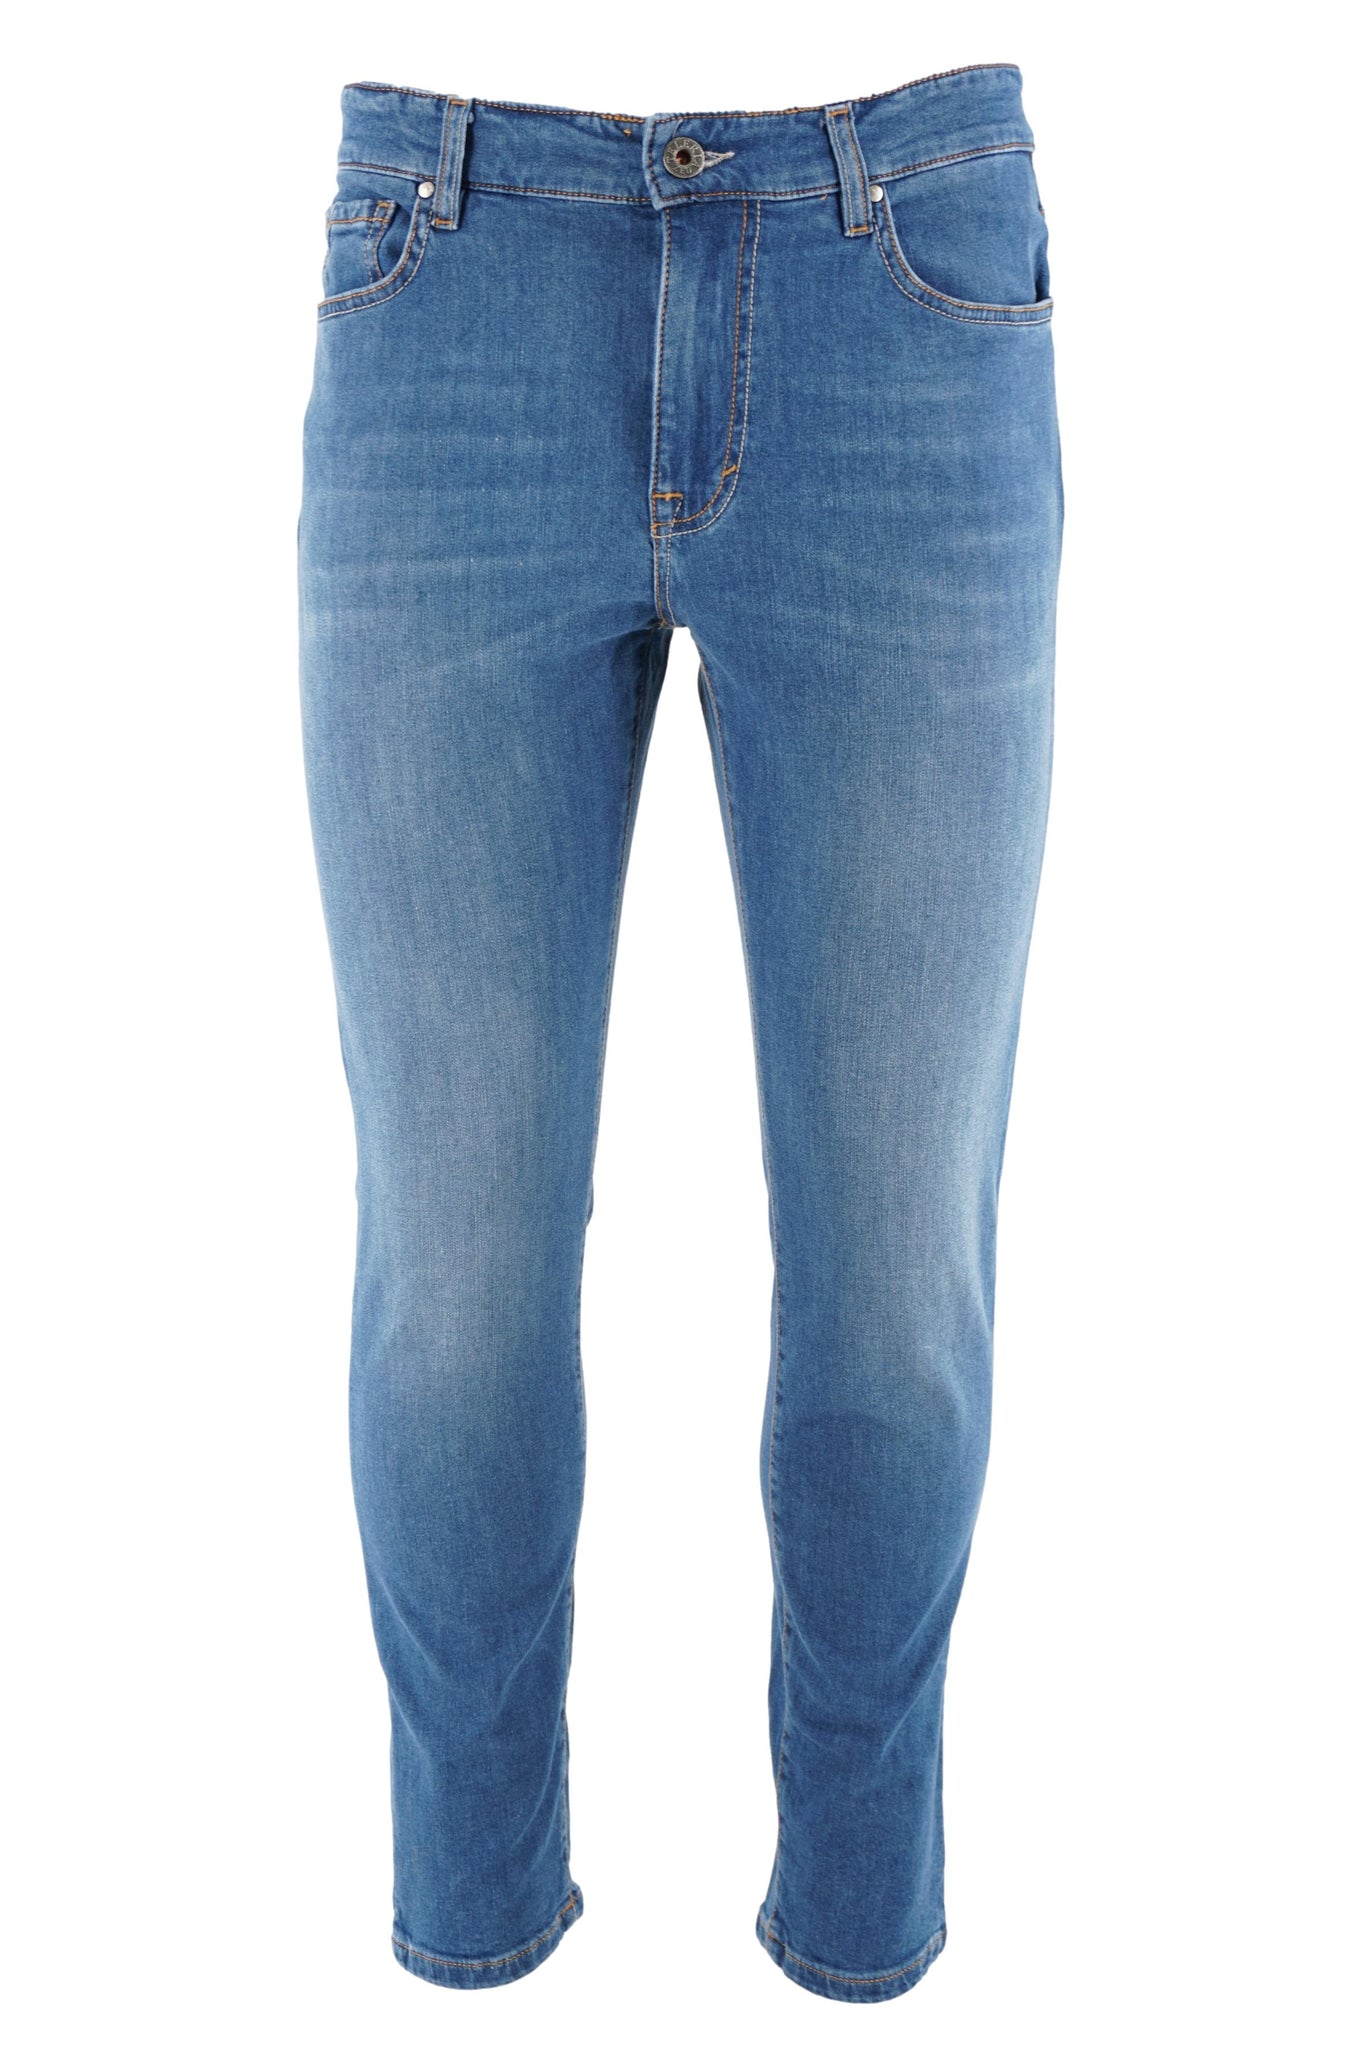 Jeans Cinque Tasche / Jeans - Ideal Moda